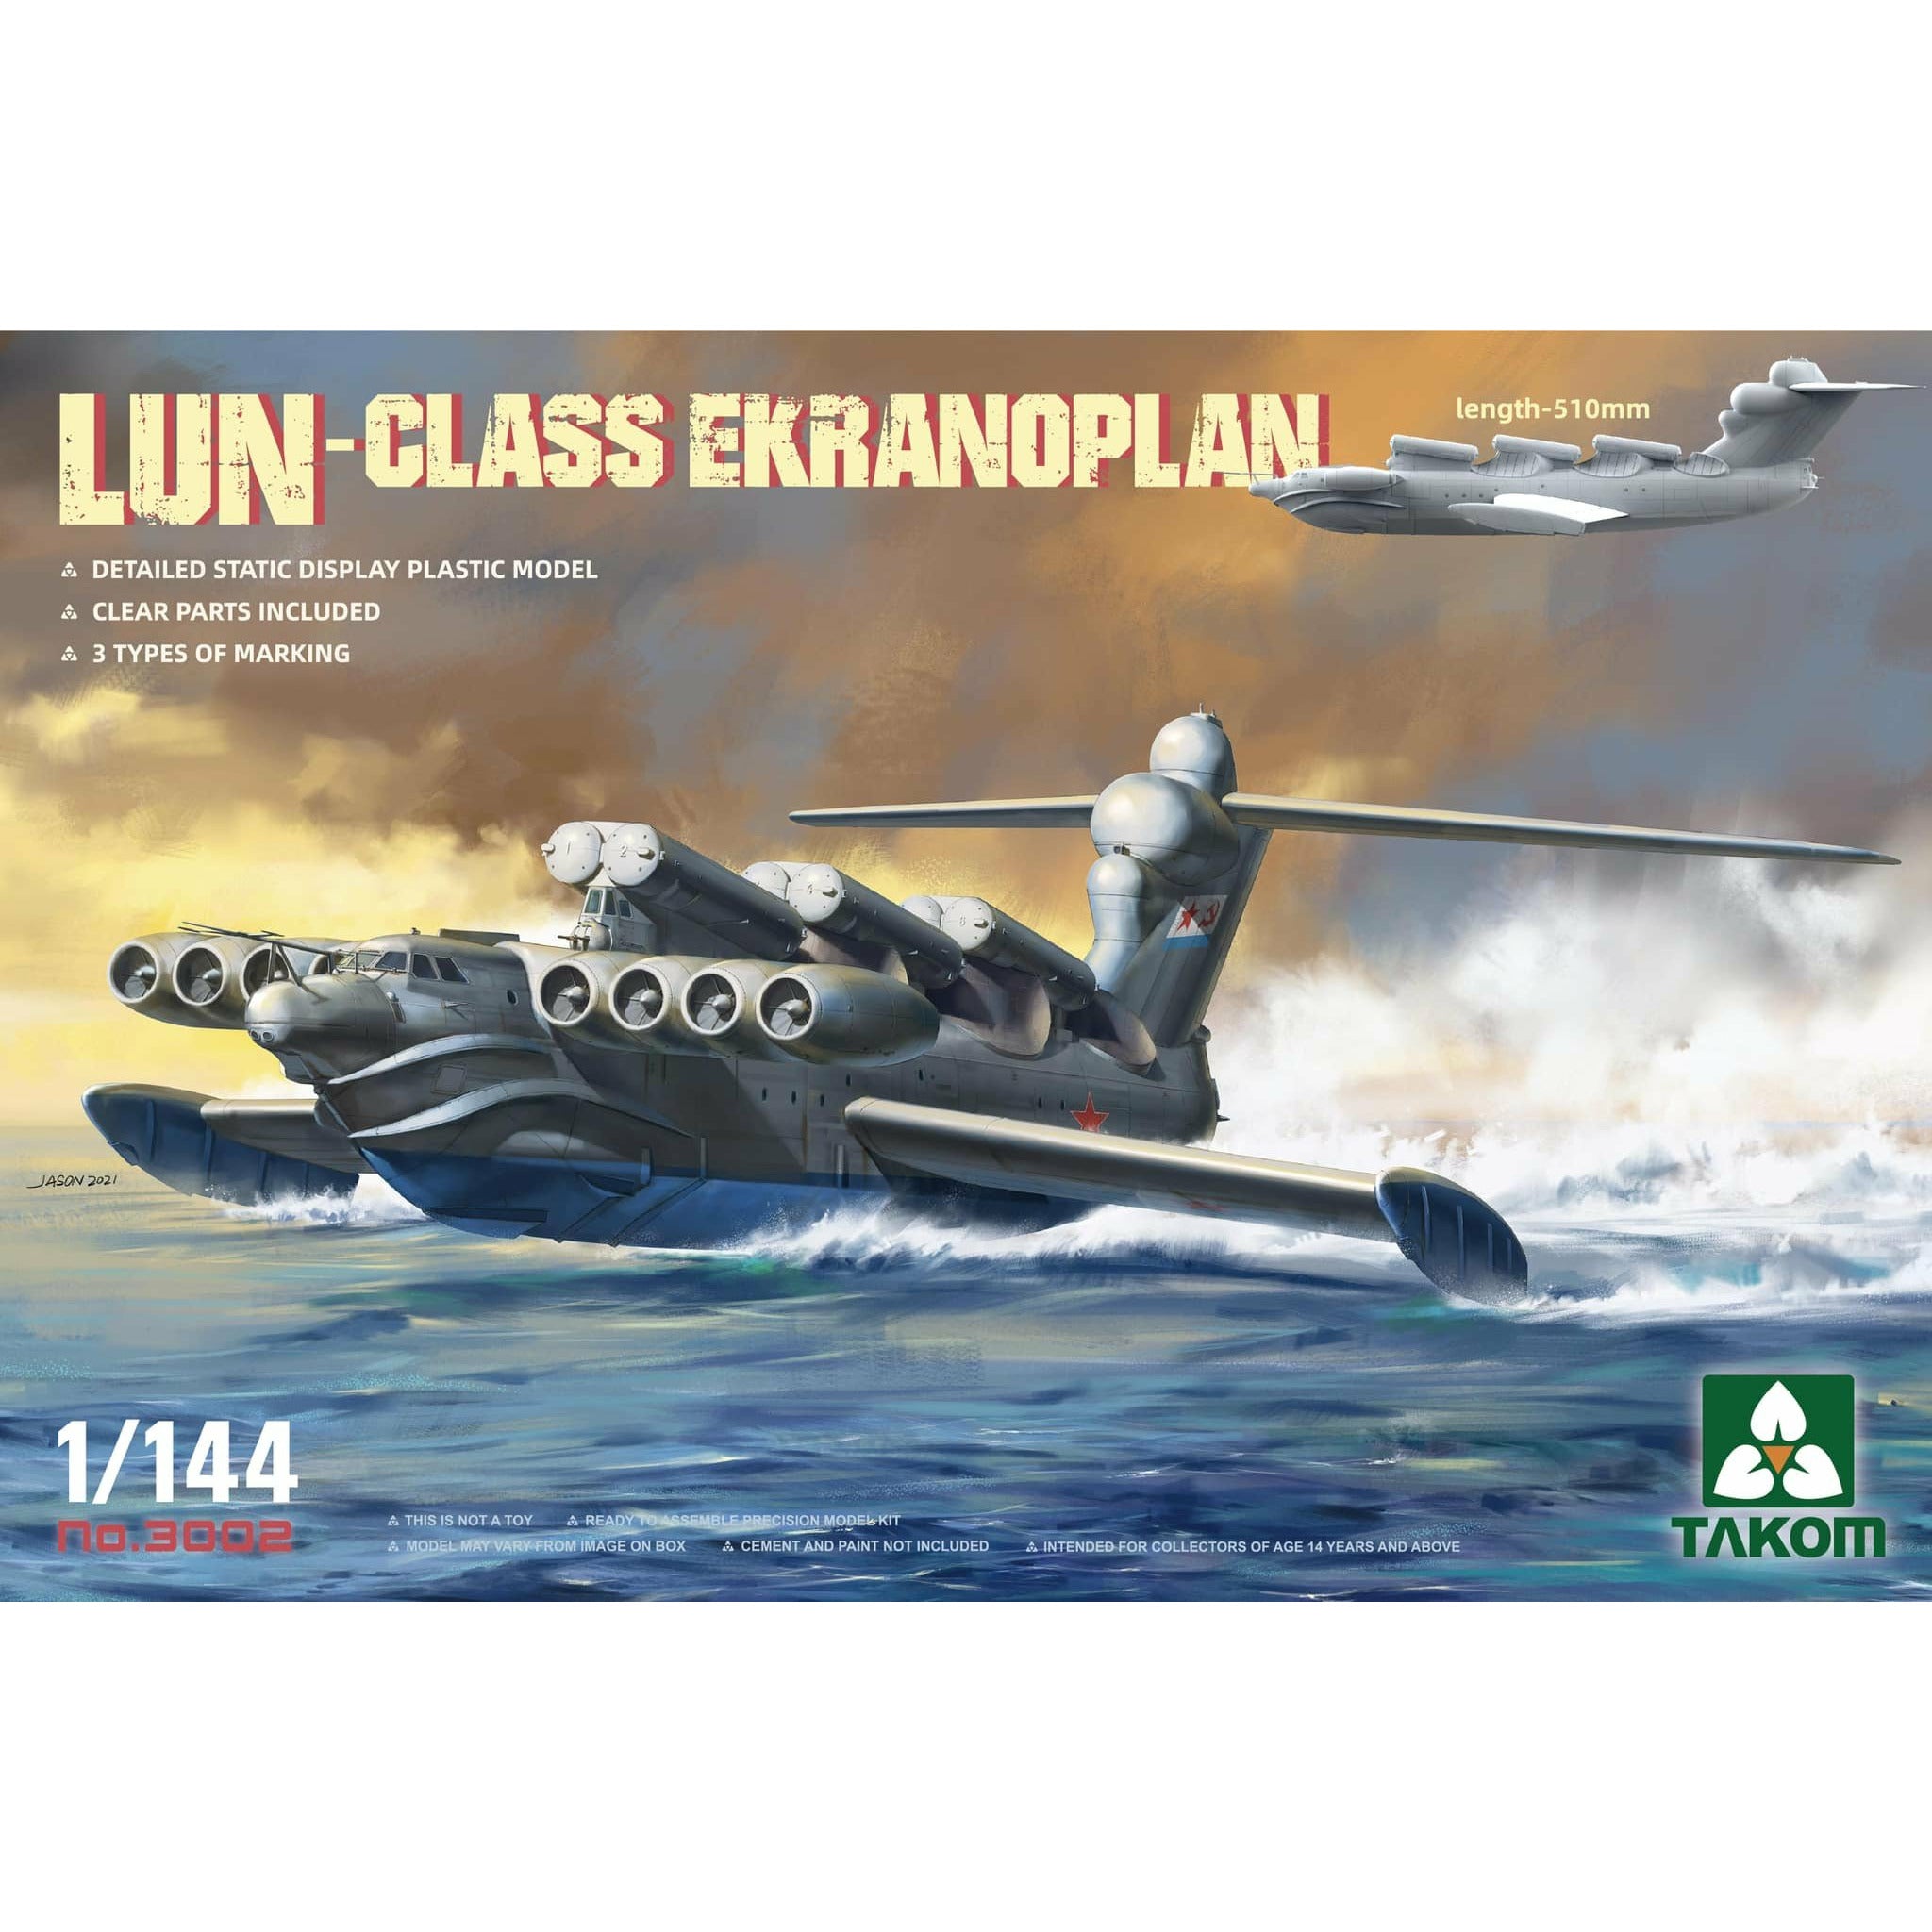 Lun-Class Ekranoplan 1/144 #3002 by Takom